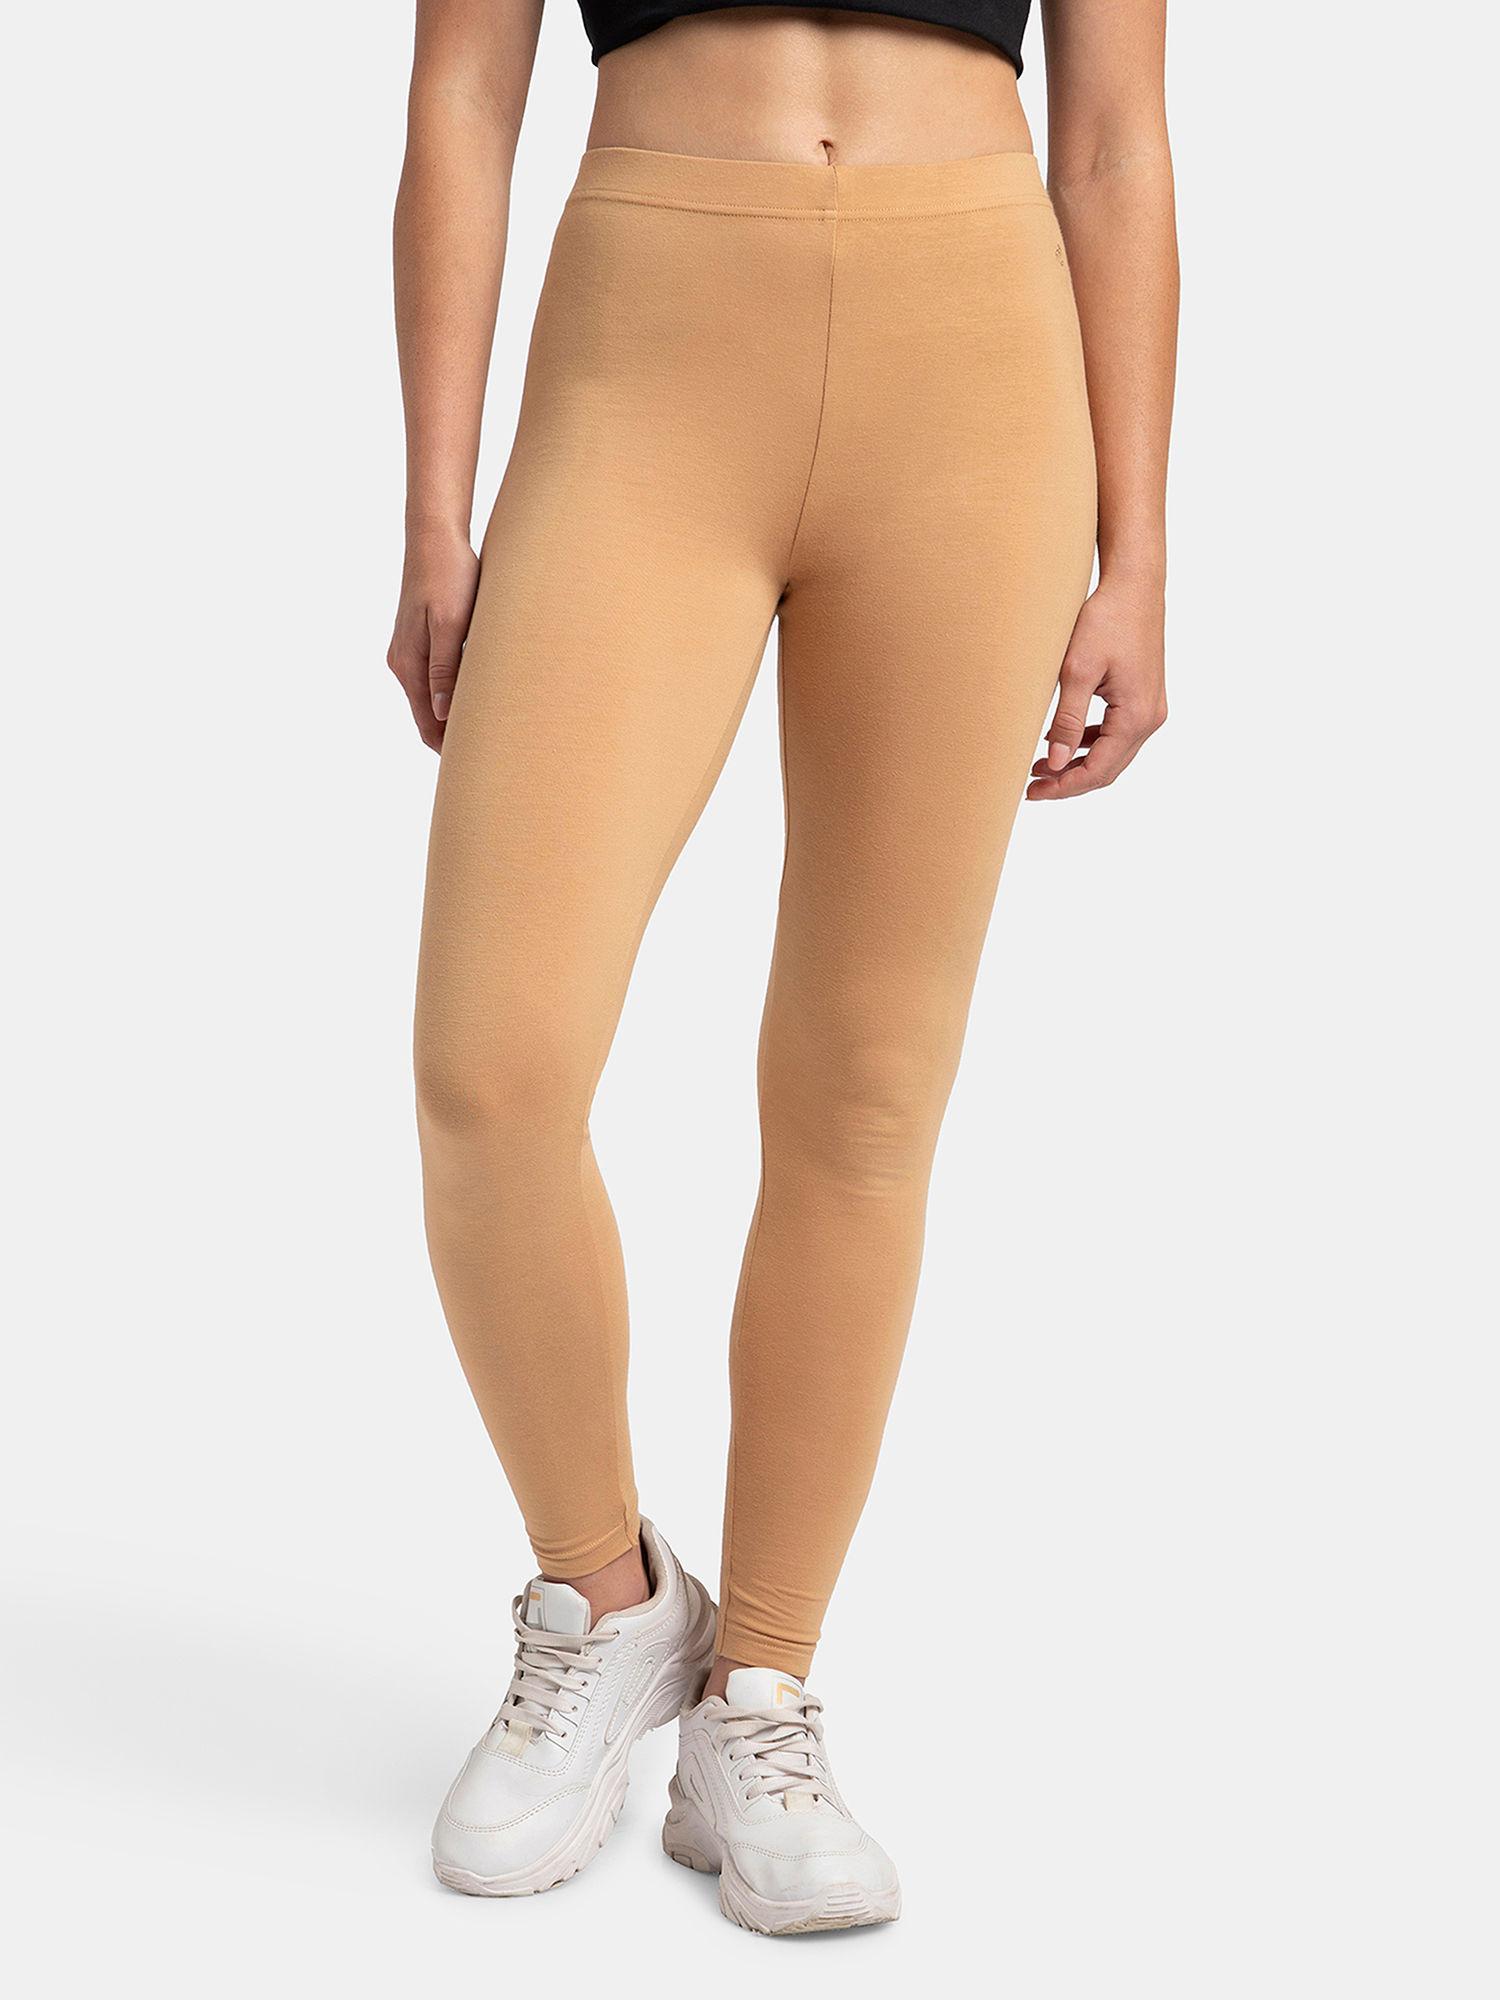 aw87 women's cotton elastane leggings with ultrasoft waistband brown